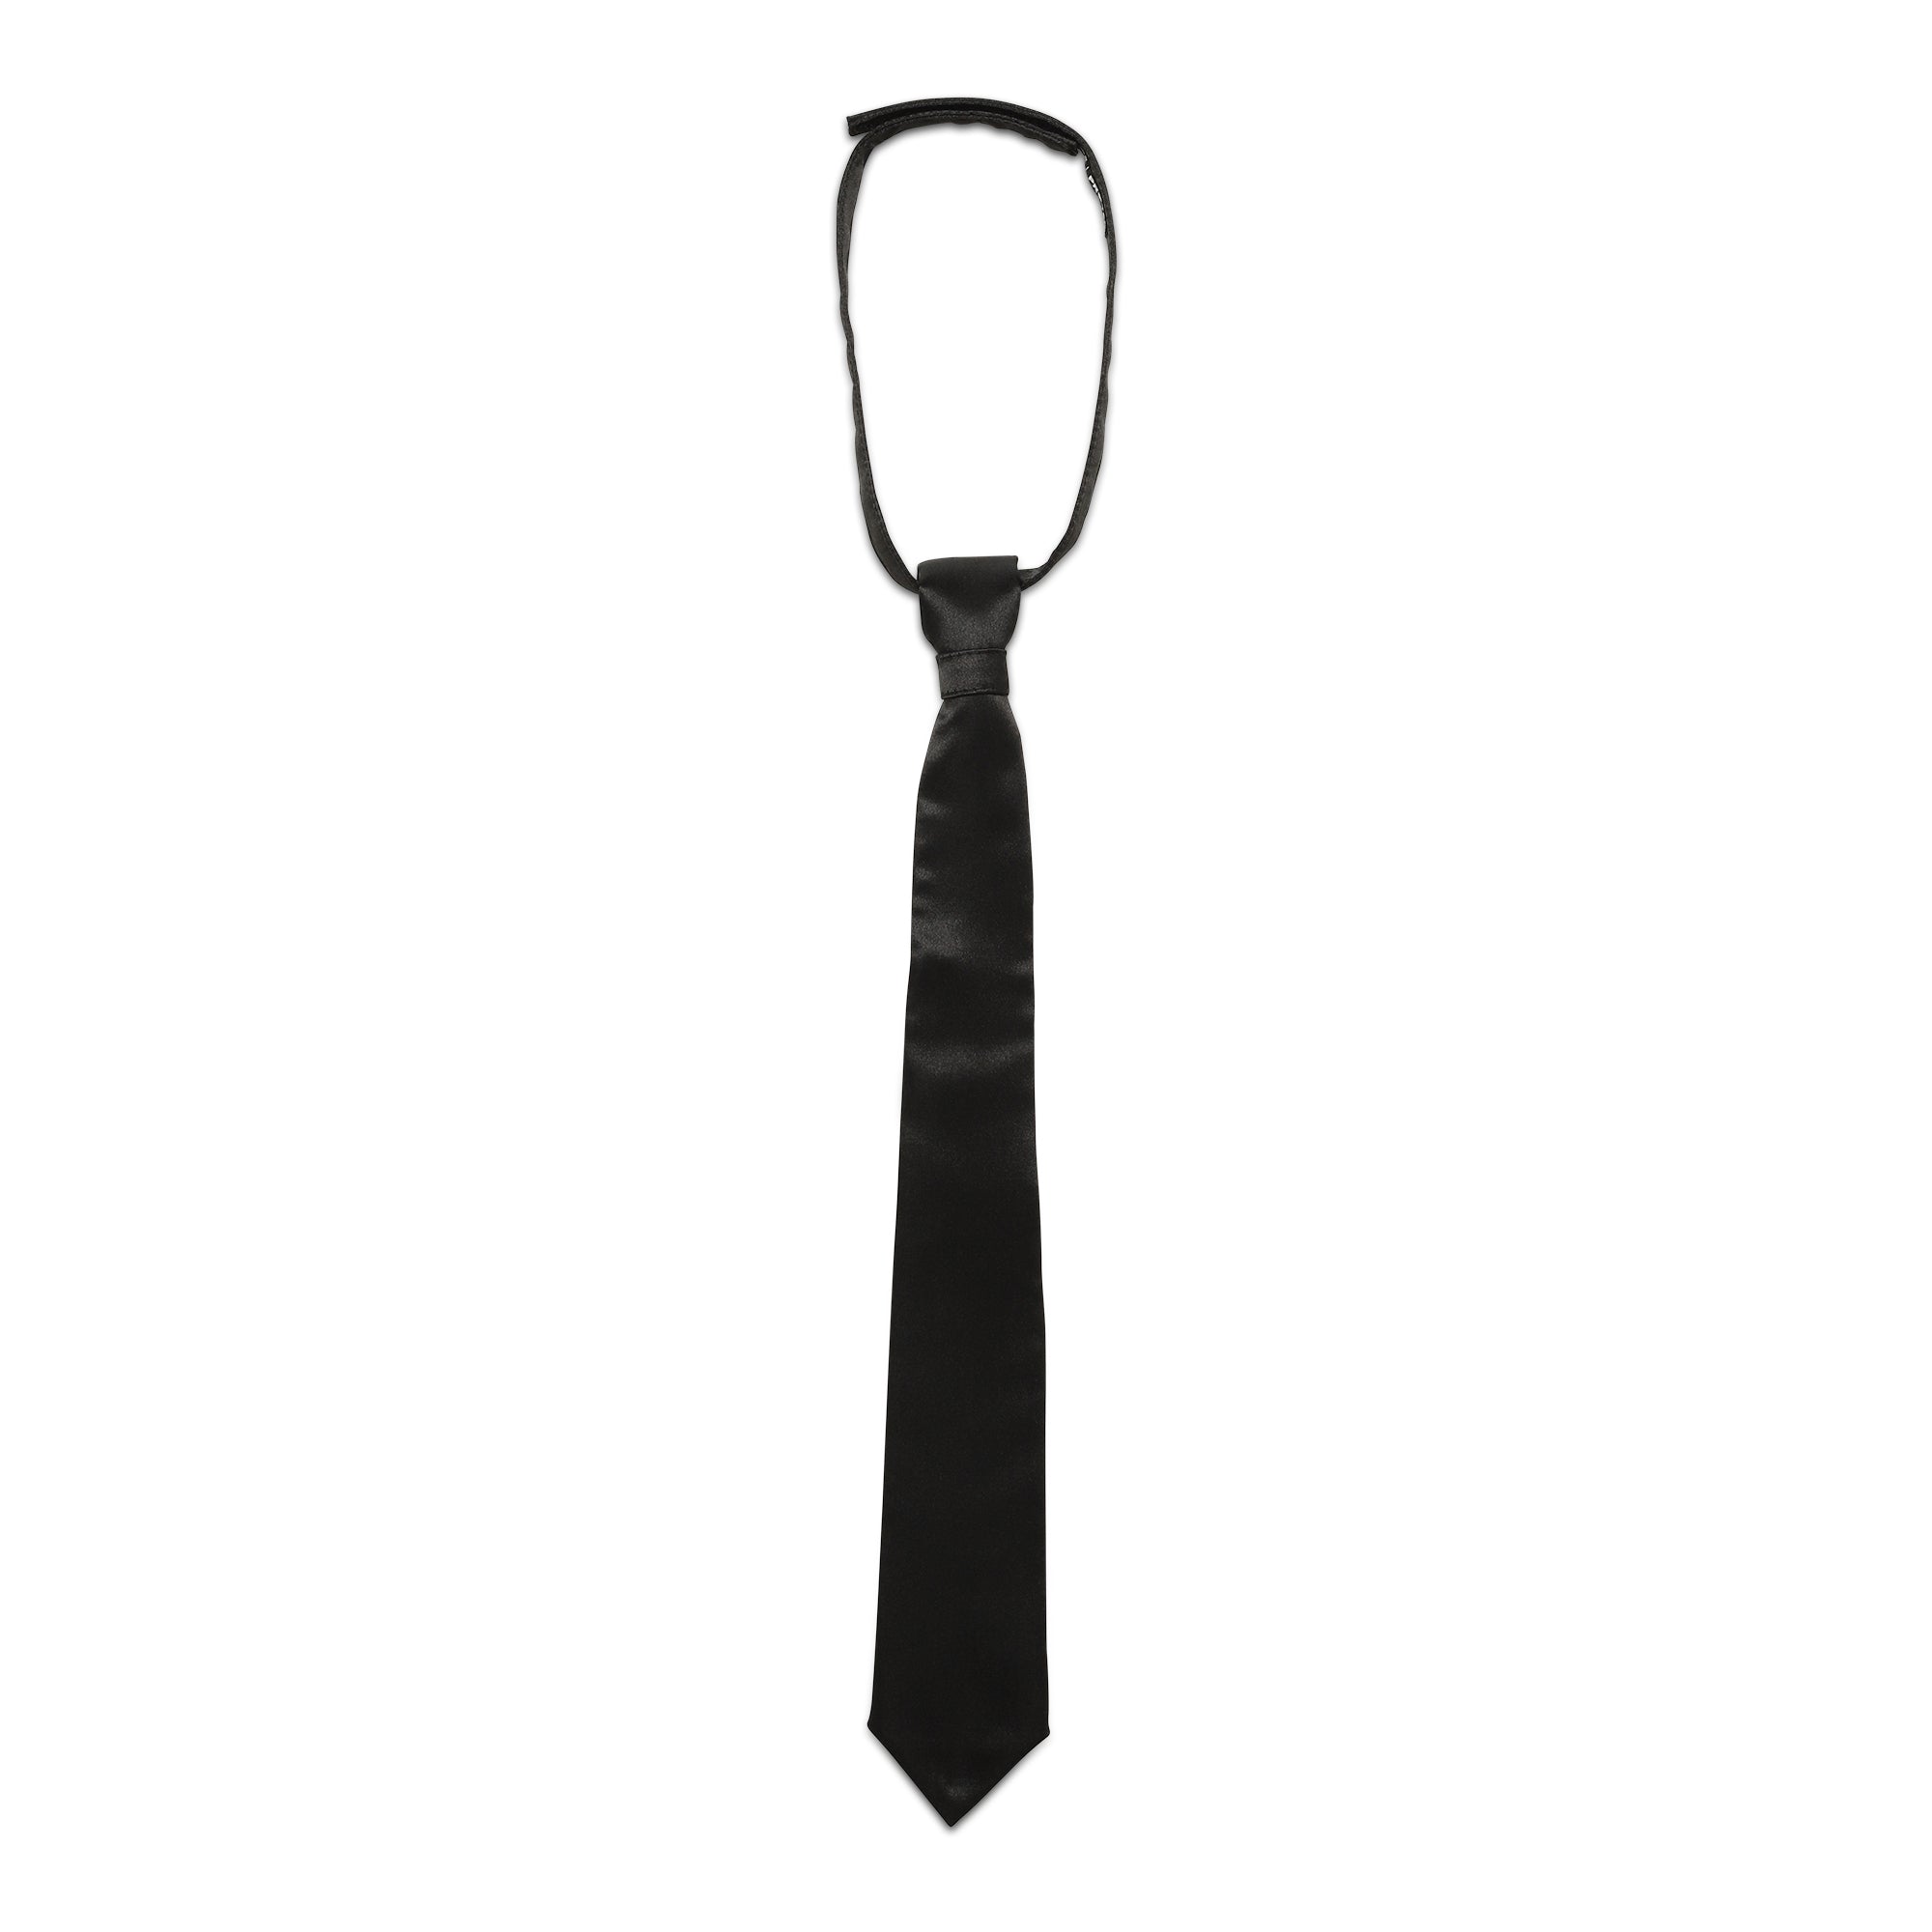 Cravatta nera lucida con strap posteriore - CRAVATTANEROLUCIDONERO